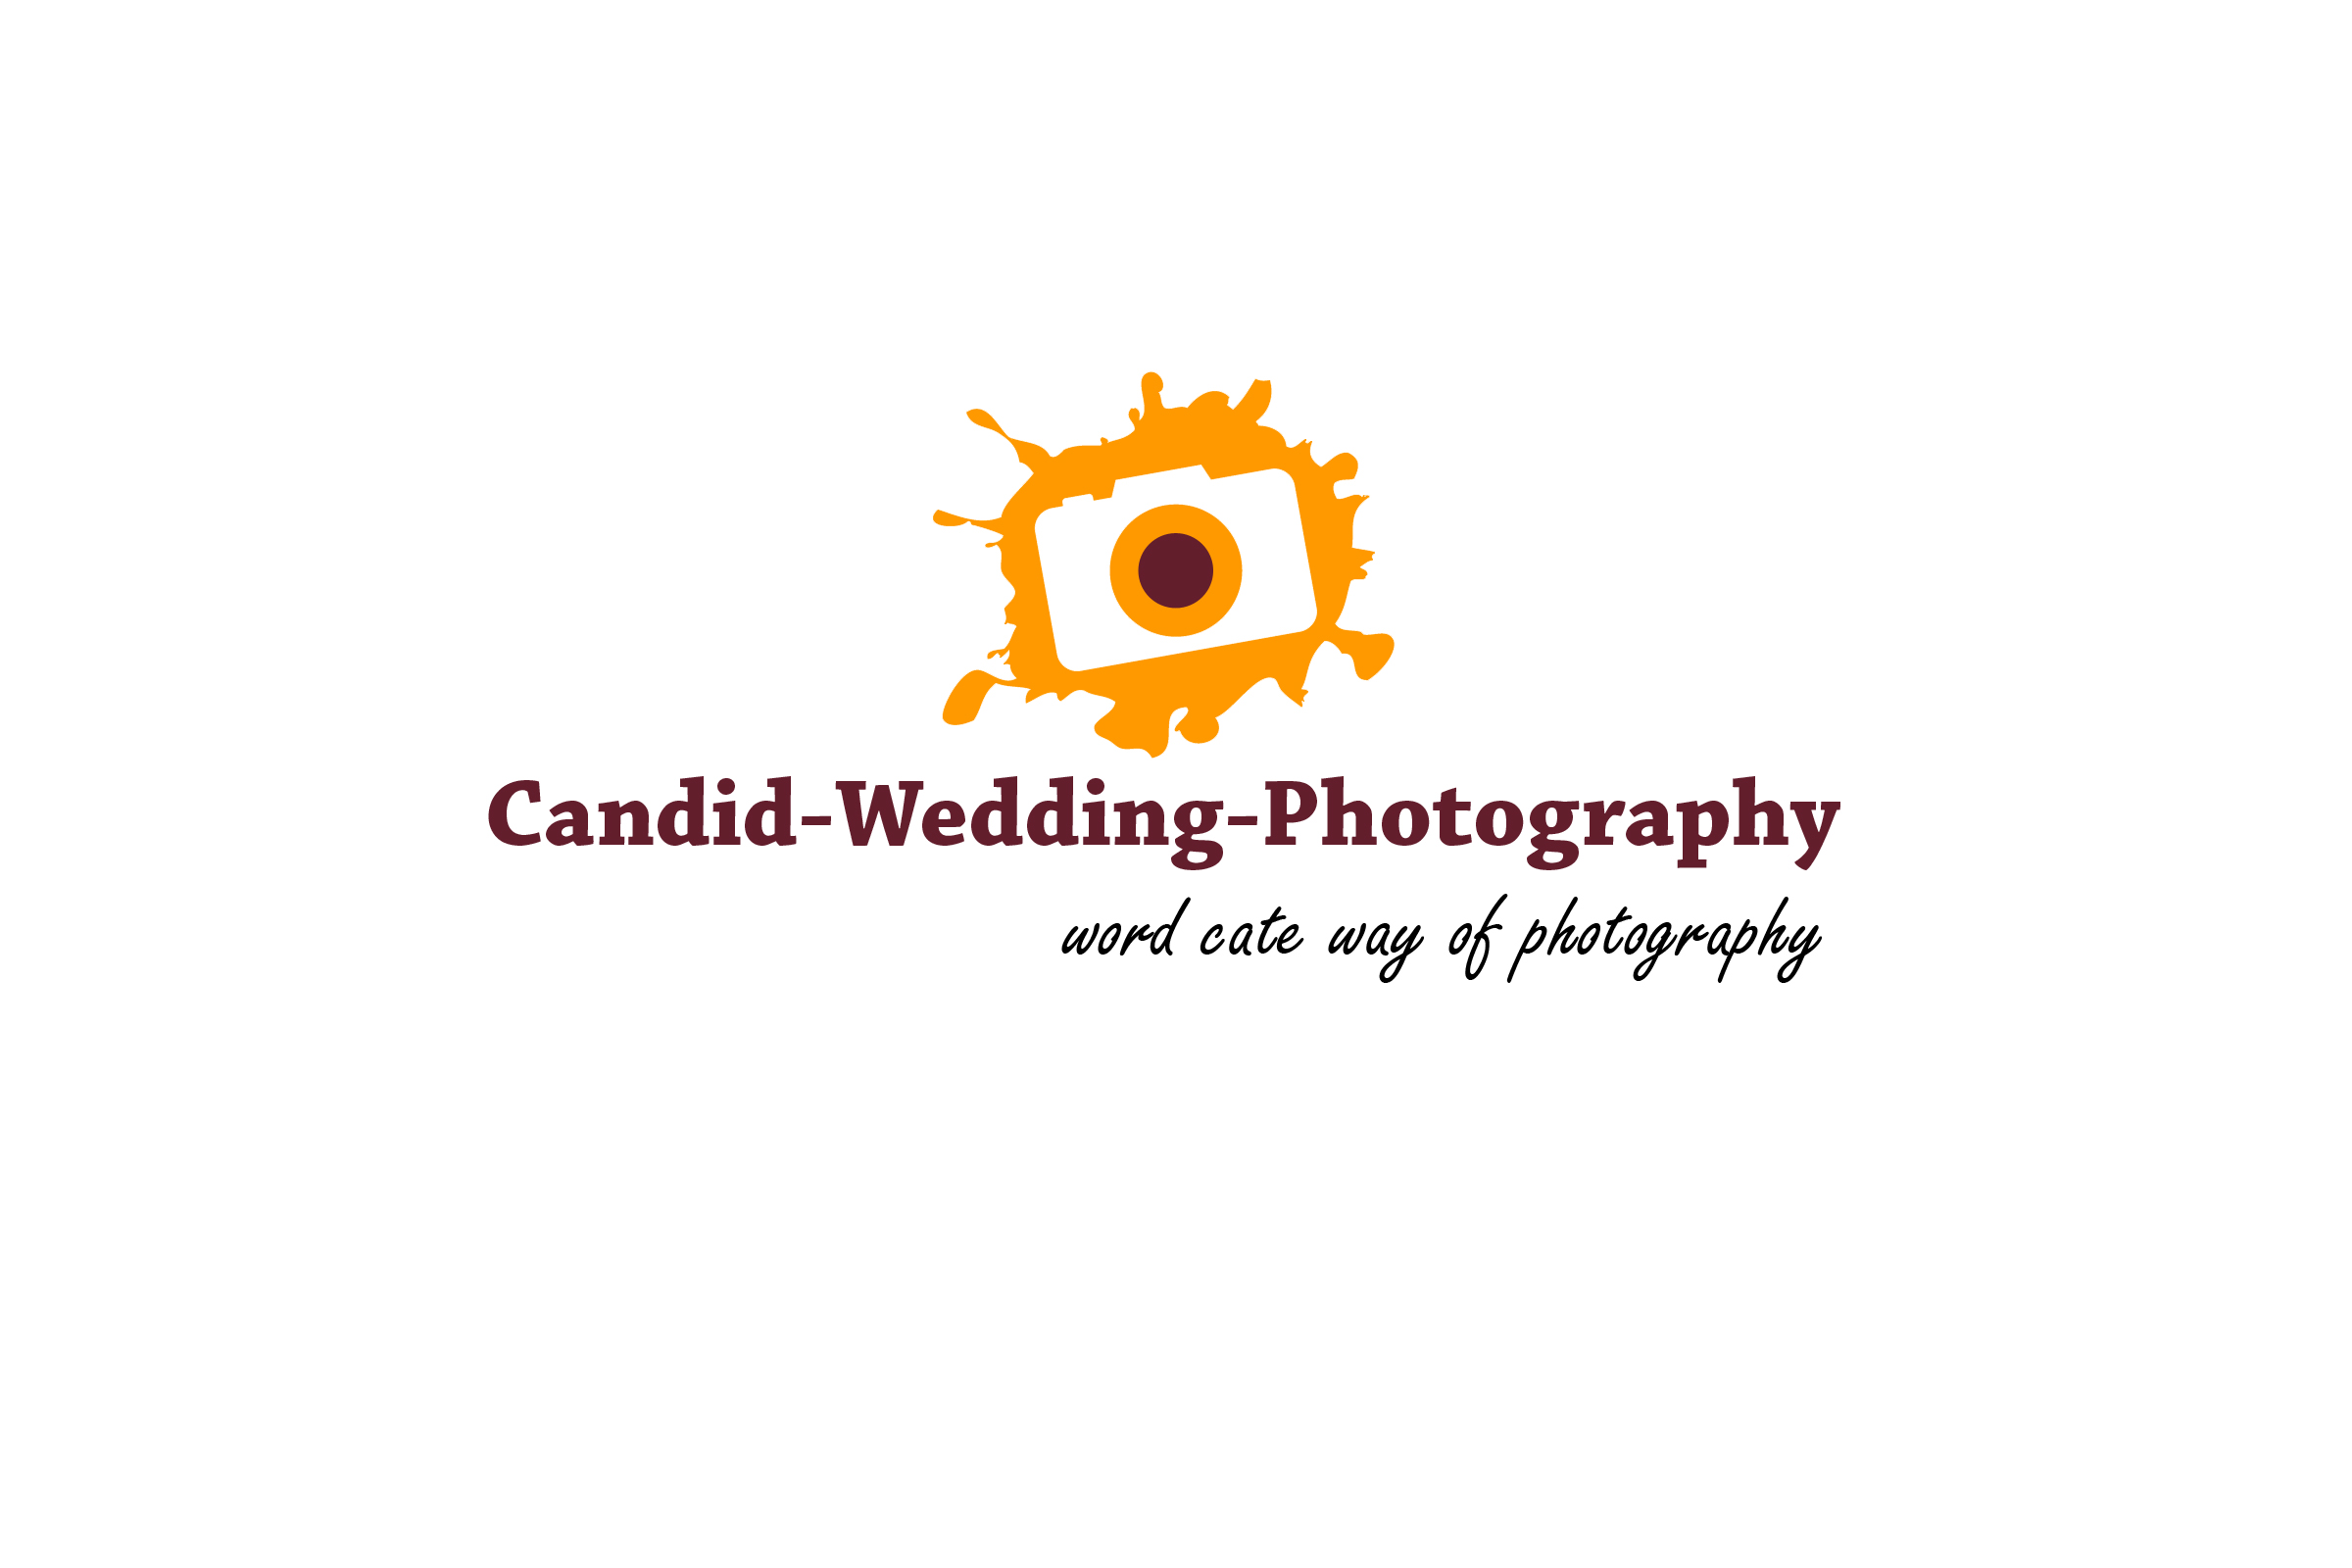 candid-wedding-photography logo designing in Chennai